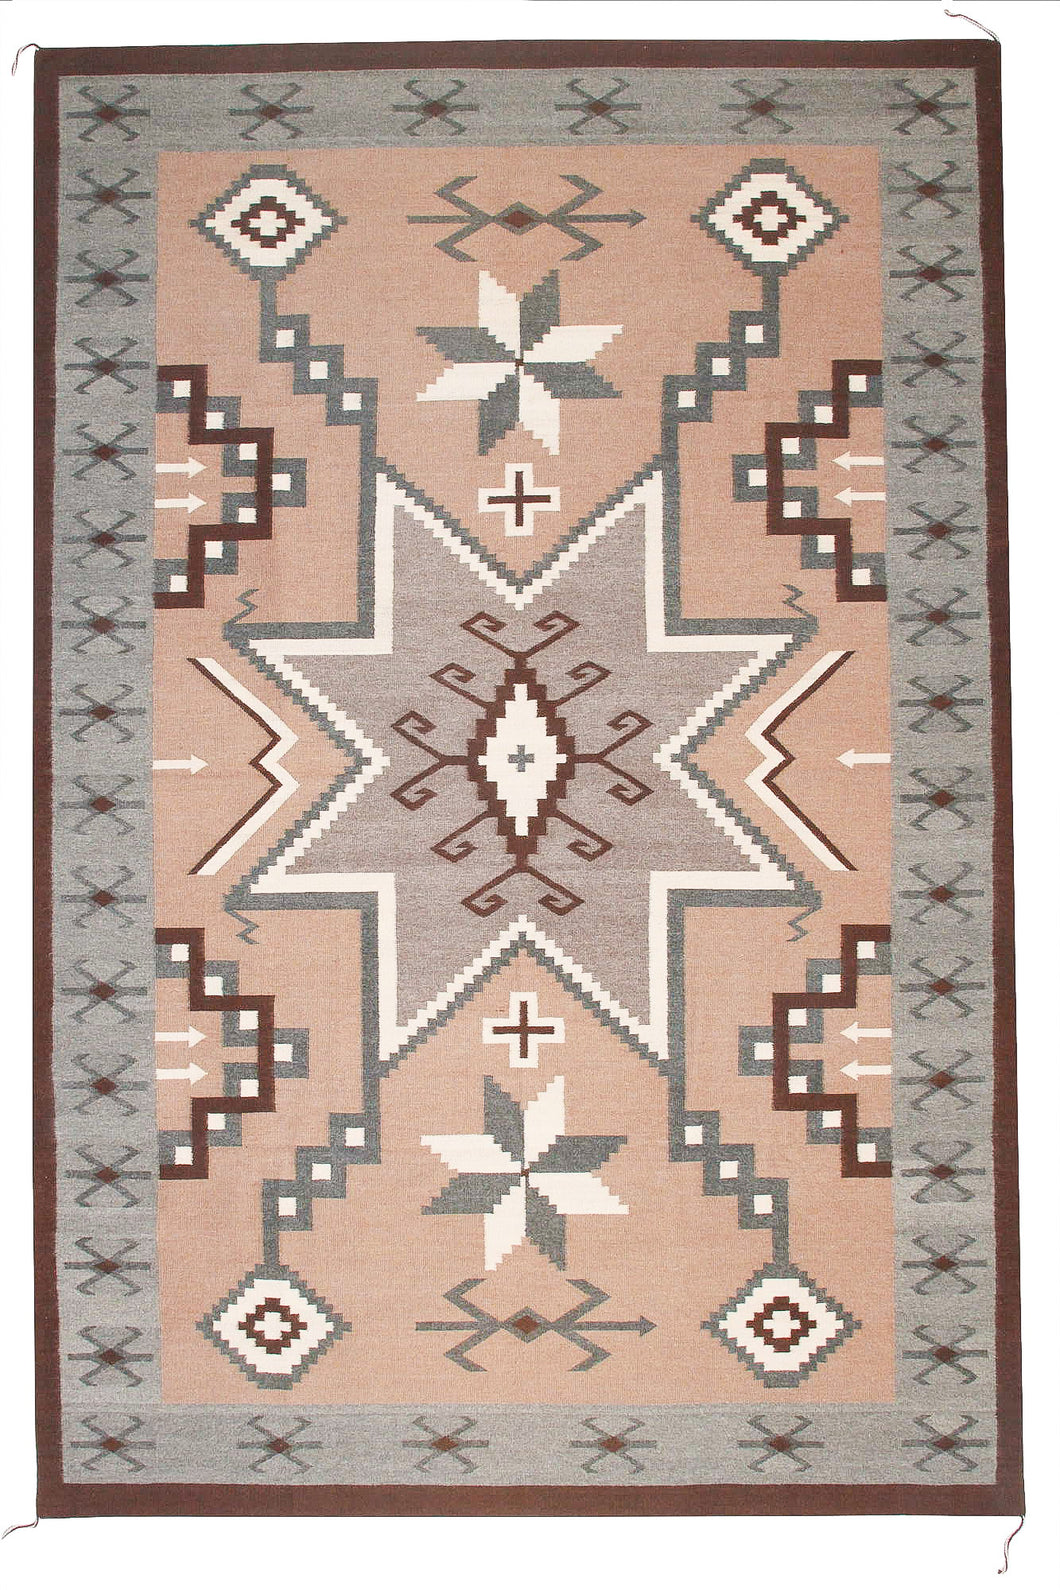 Handwoven Zapotec Indian Rug - Storm of Stars Wool Oaxacan Textile